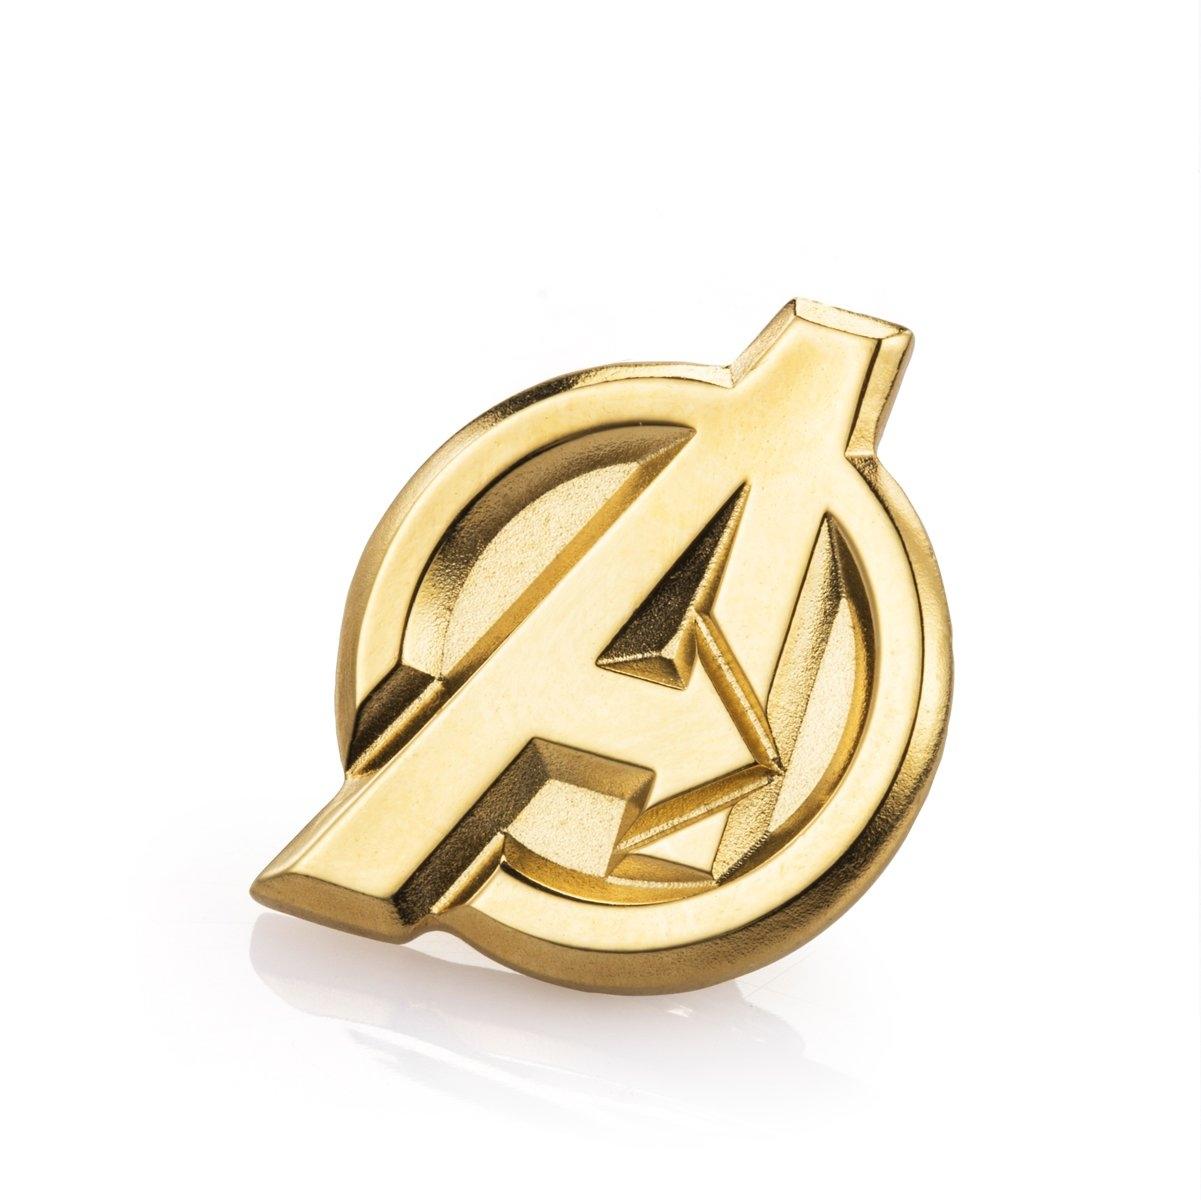 Avengers Gilt Insignia Lapel Pin